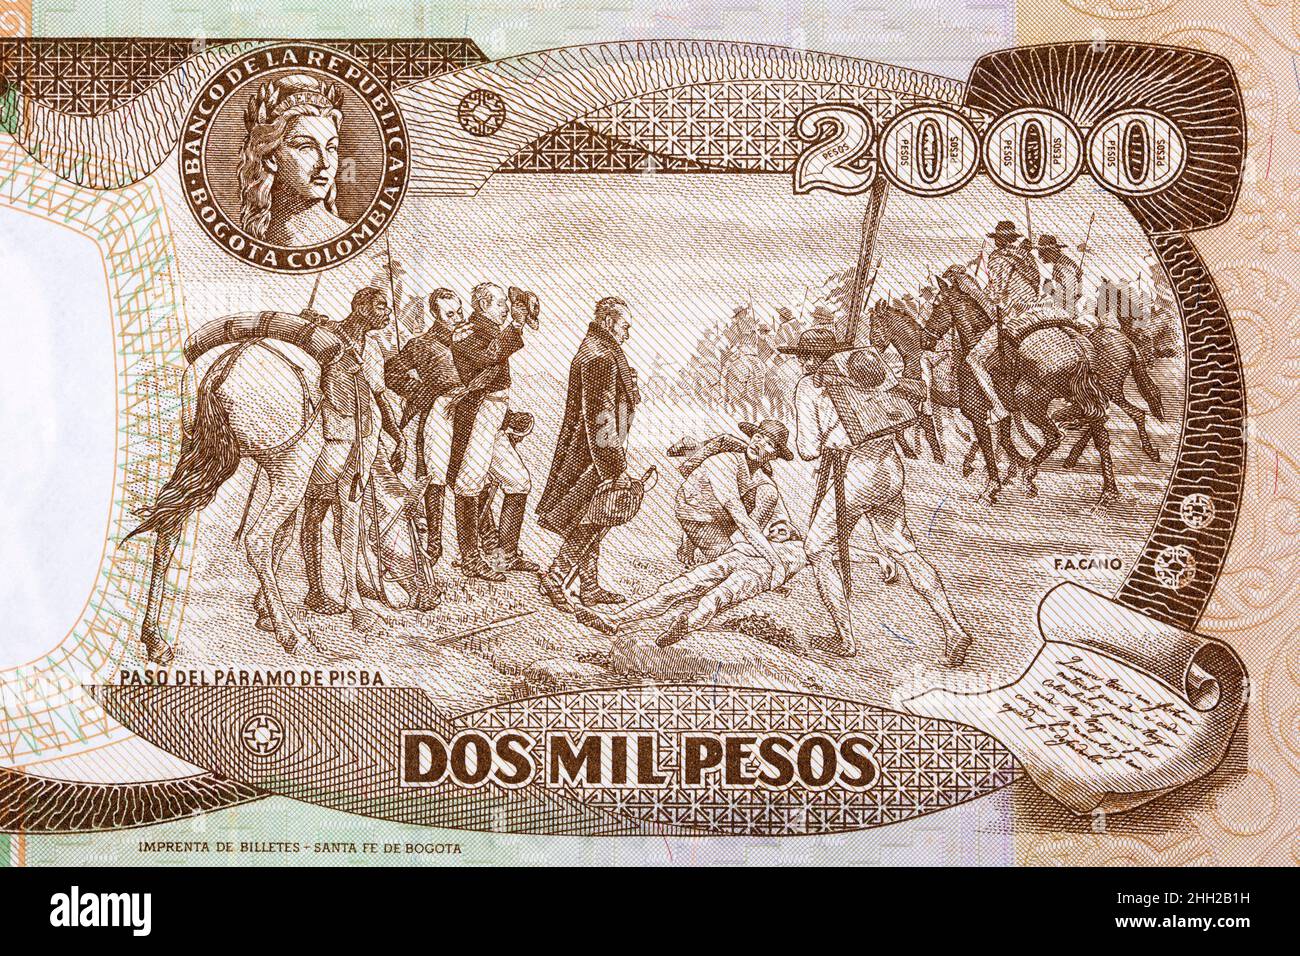 Scene at Paso del Paramo de Pisba from old Colombian money - Pesos Stock Photo